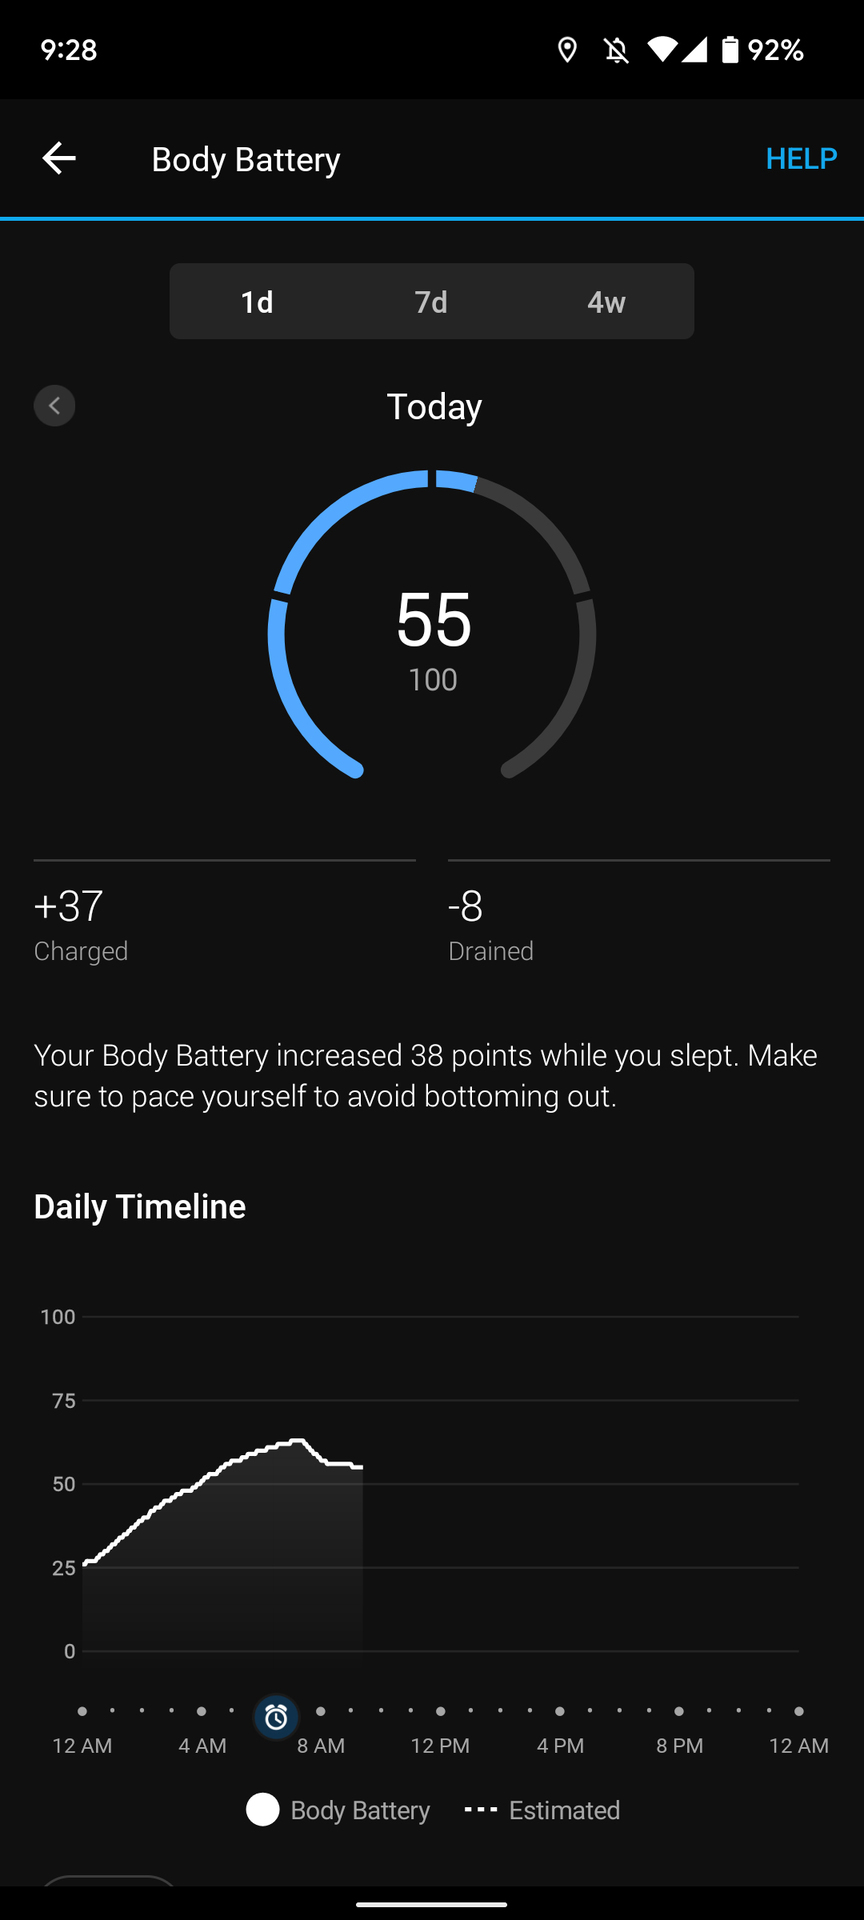 garmin body battery daily timeline